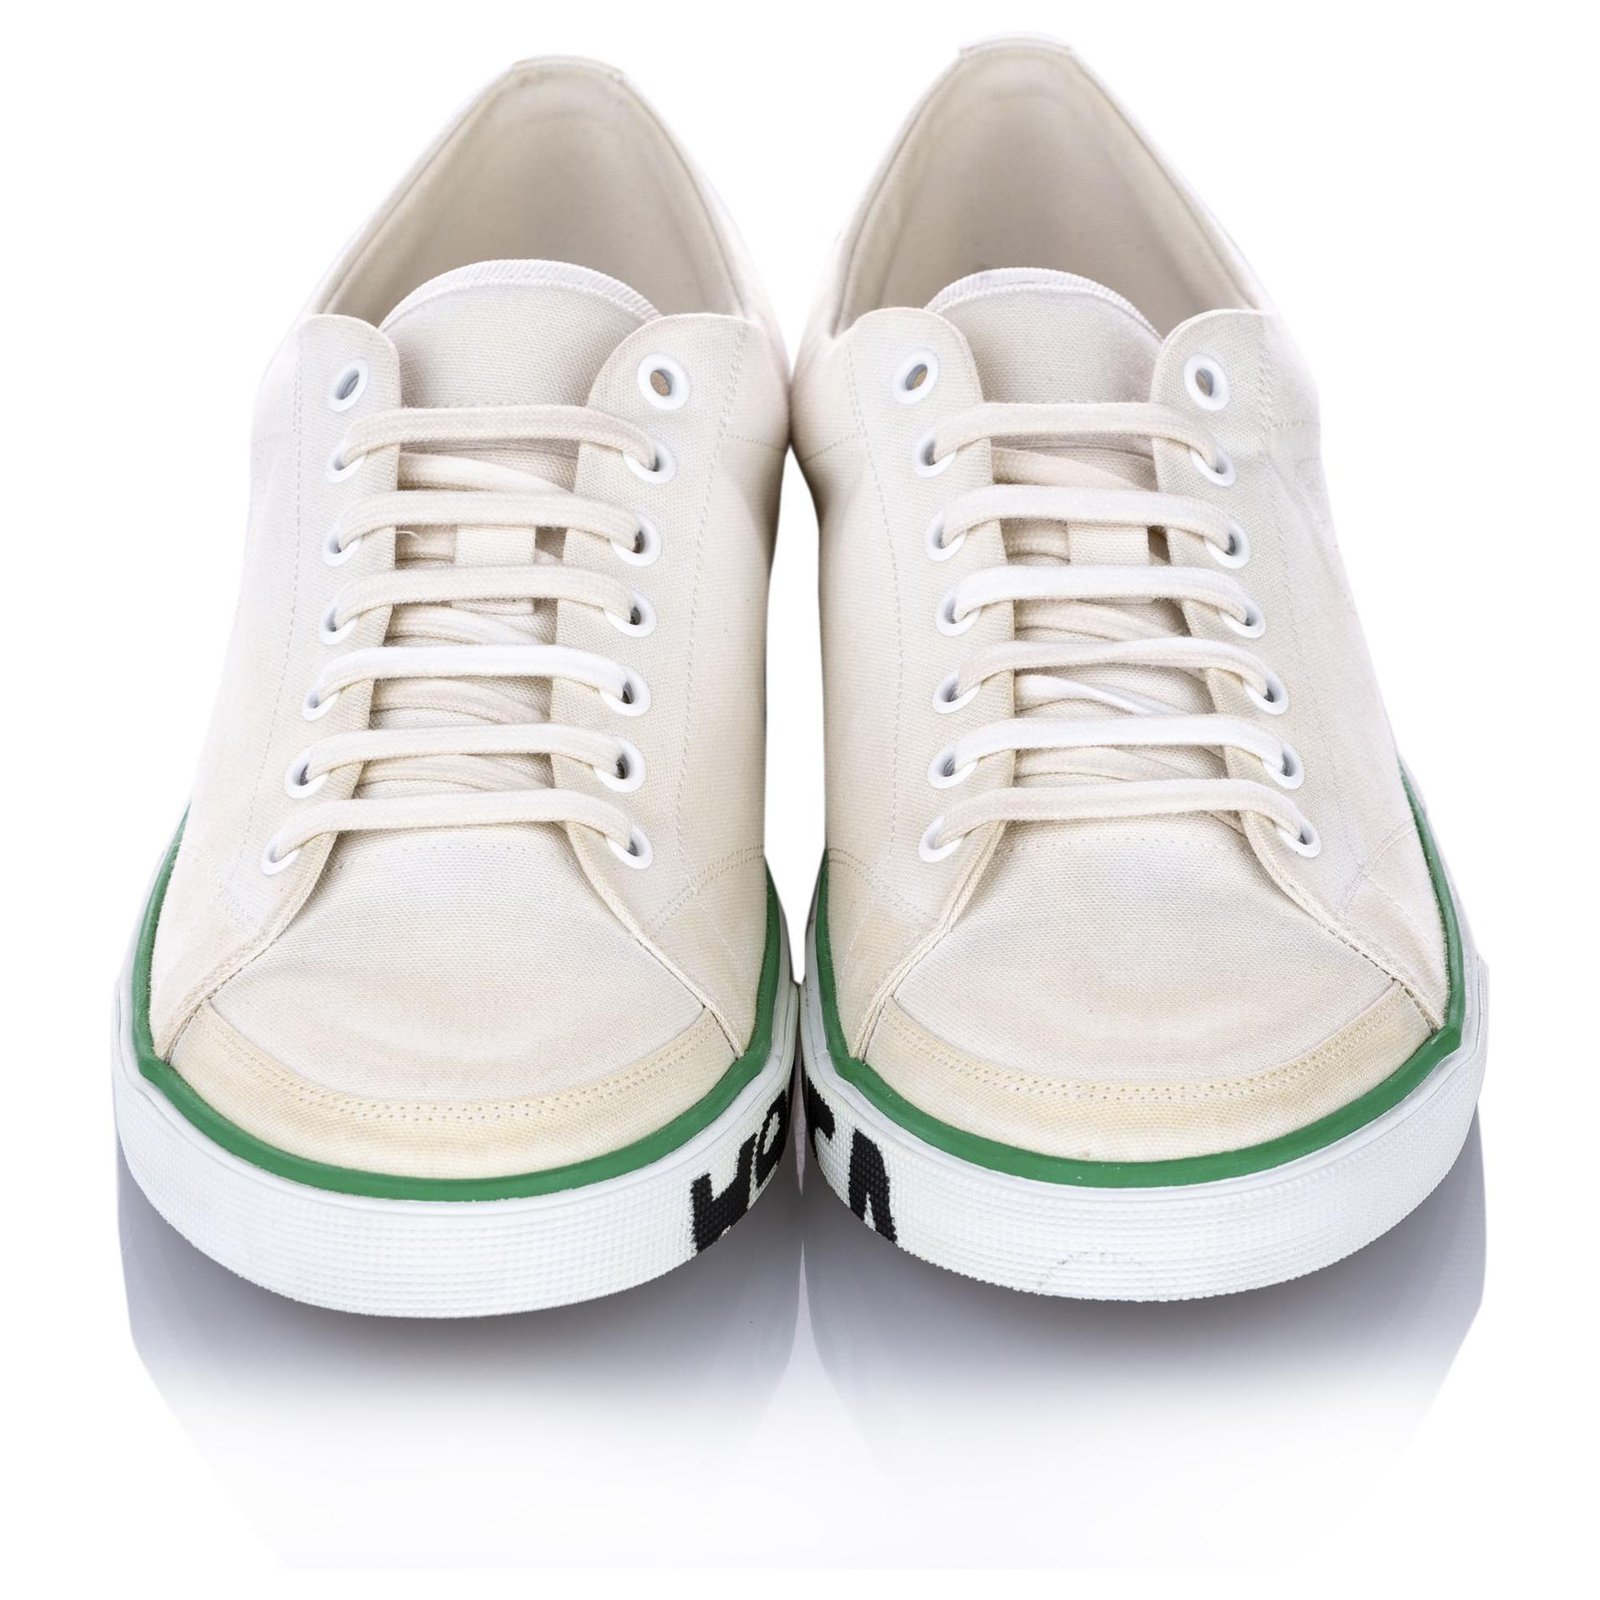 white shoes cloth